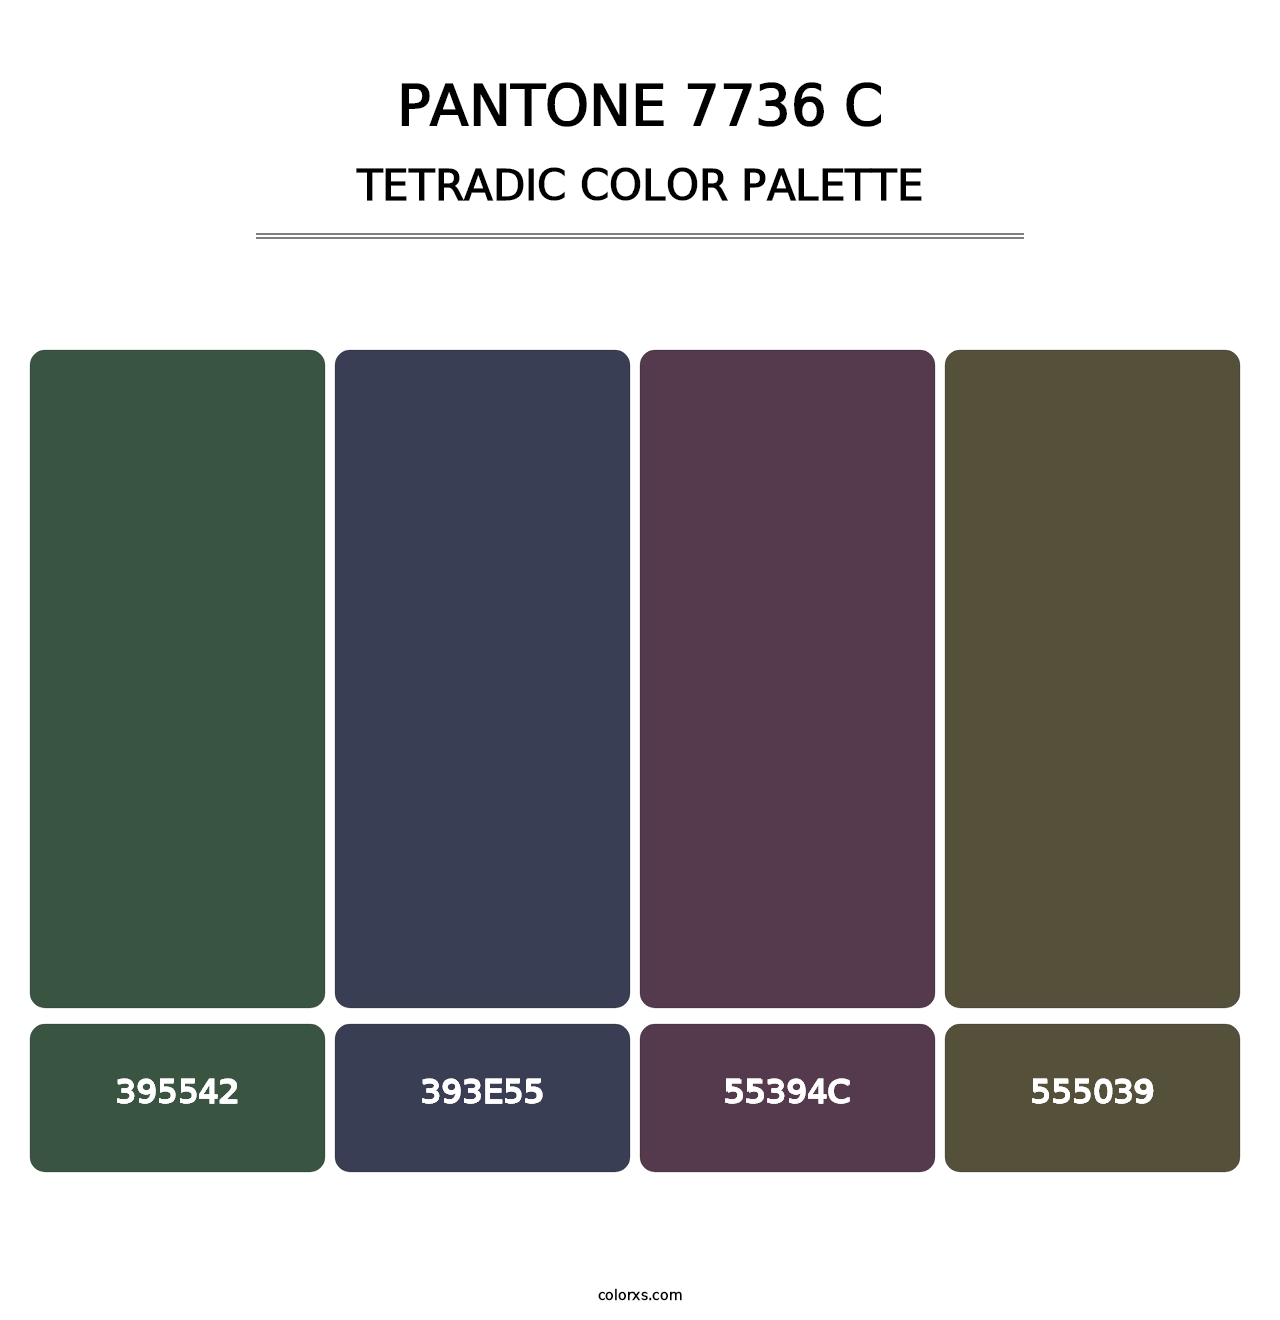 PANTONE 7736 C - Tetradic Color Palette